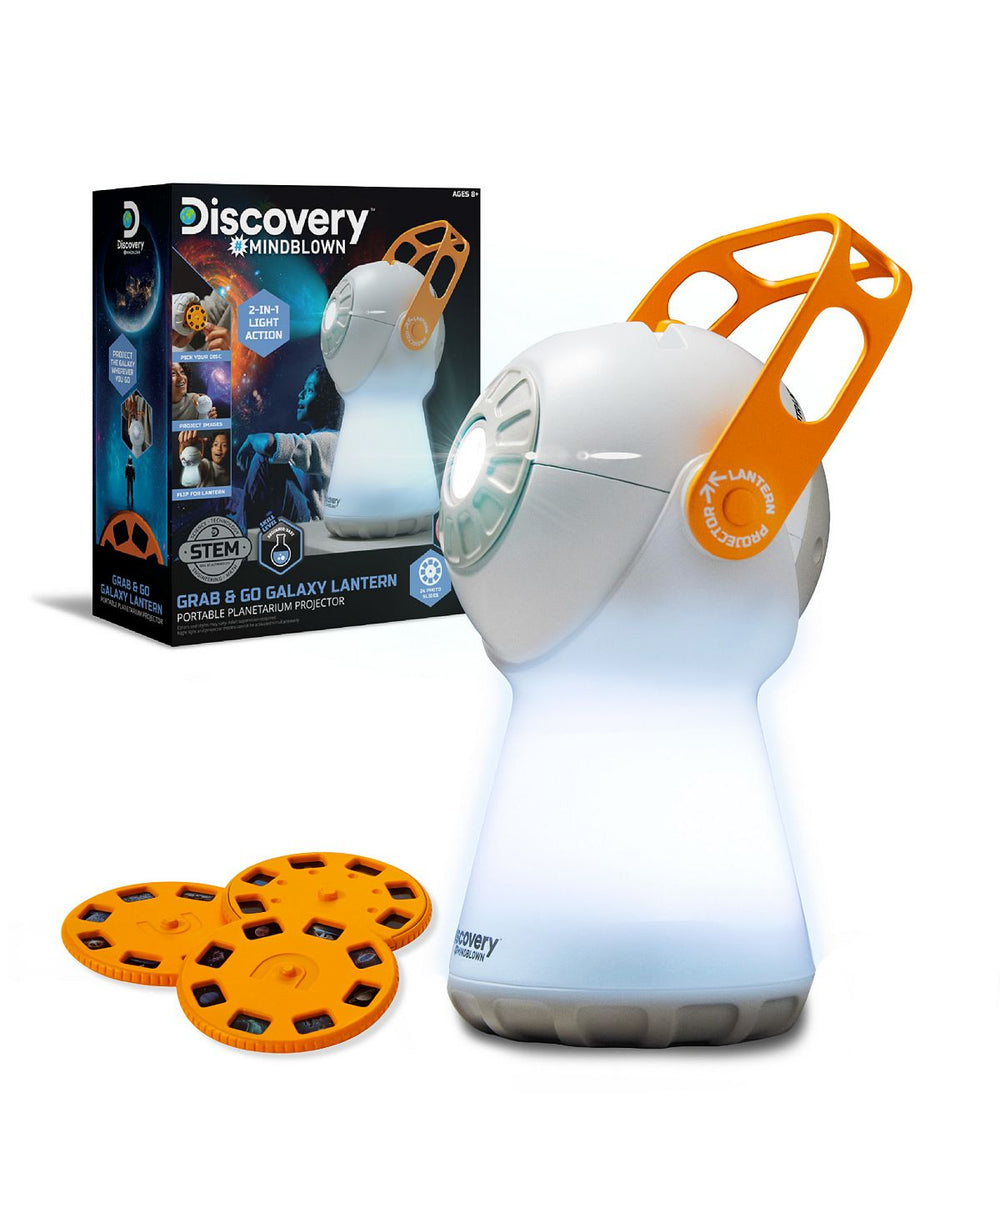 Discovery #MINDBLOWN Galaxy Lantern Portable Planetarium Projector Kit